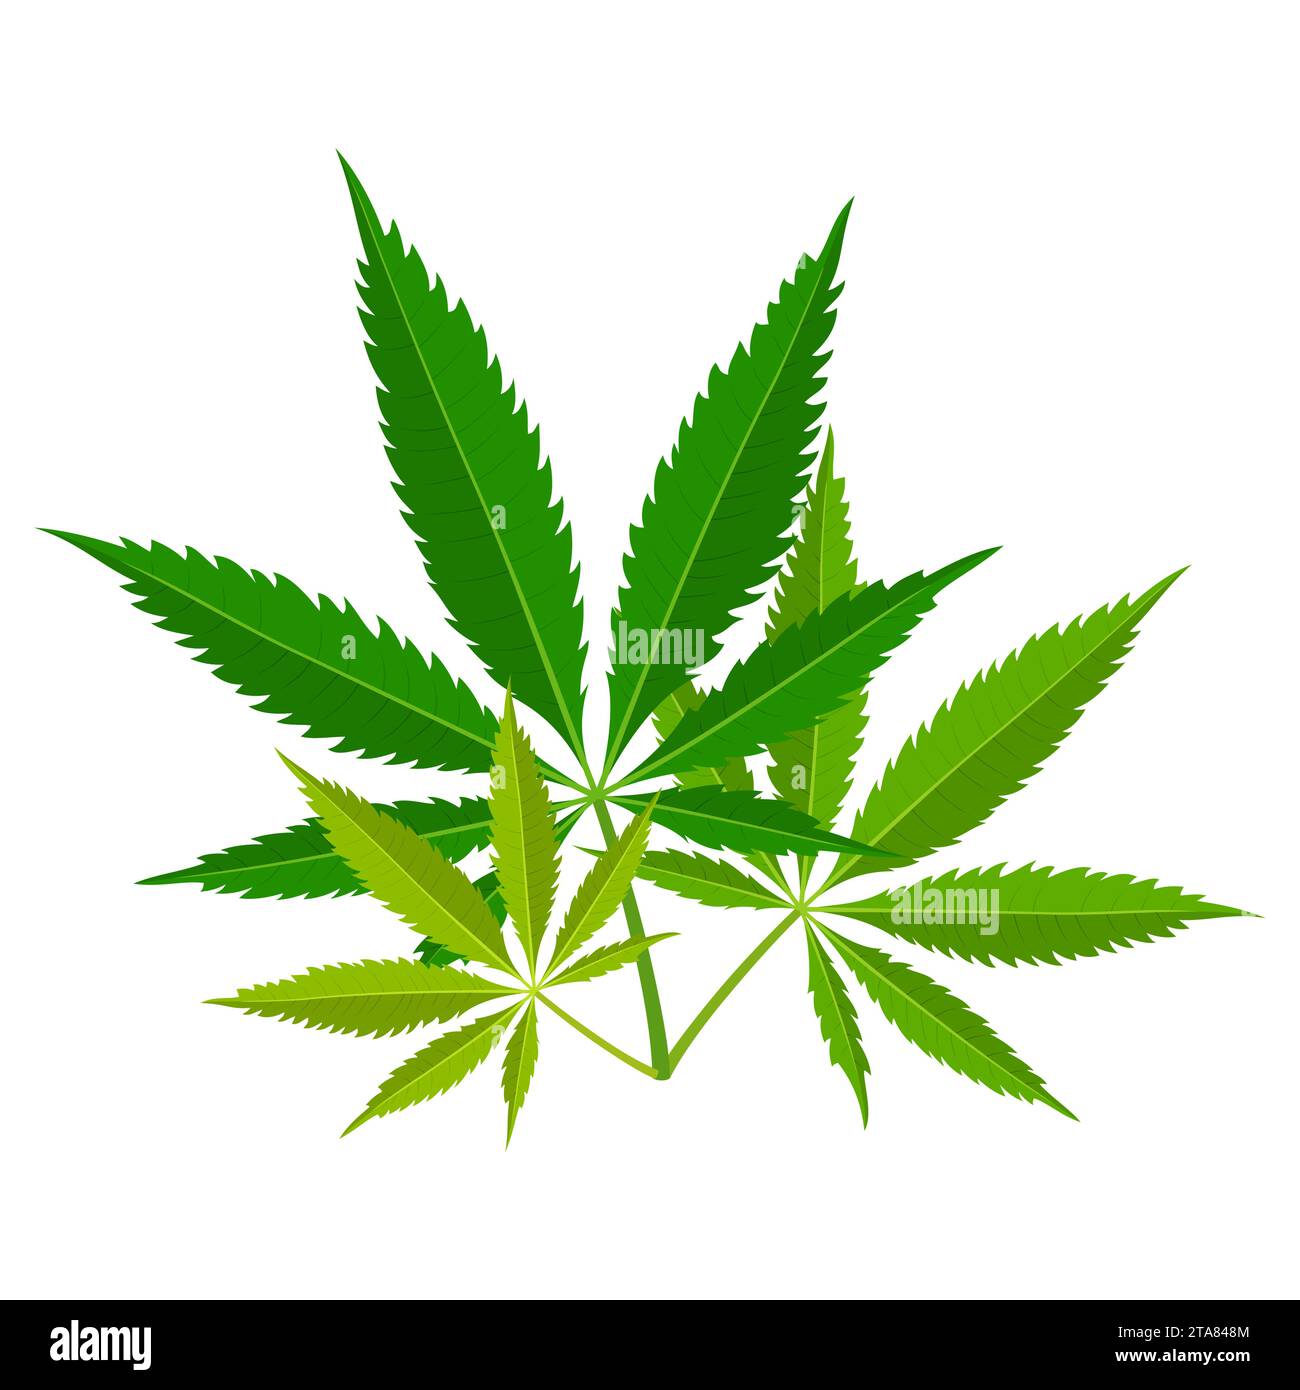 Grüne Marihuanablätter. Medizinische Cannabispflanze, Kräuterindica sativa. Naturhanf. Suchtrauchunkraut Drogen illegales Betäubungsmittel. Vektorabbildung. Stock Vektor